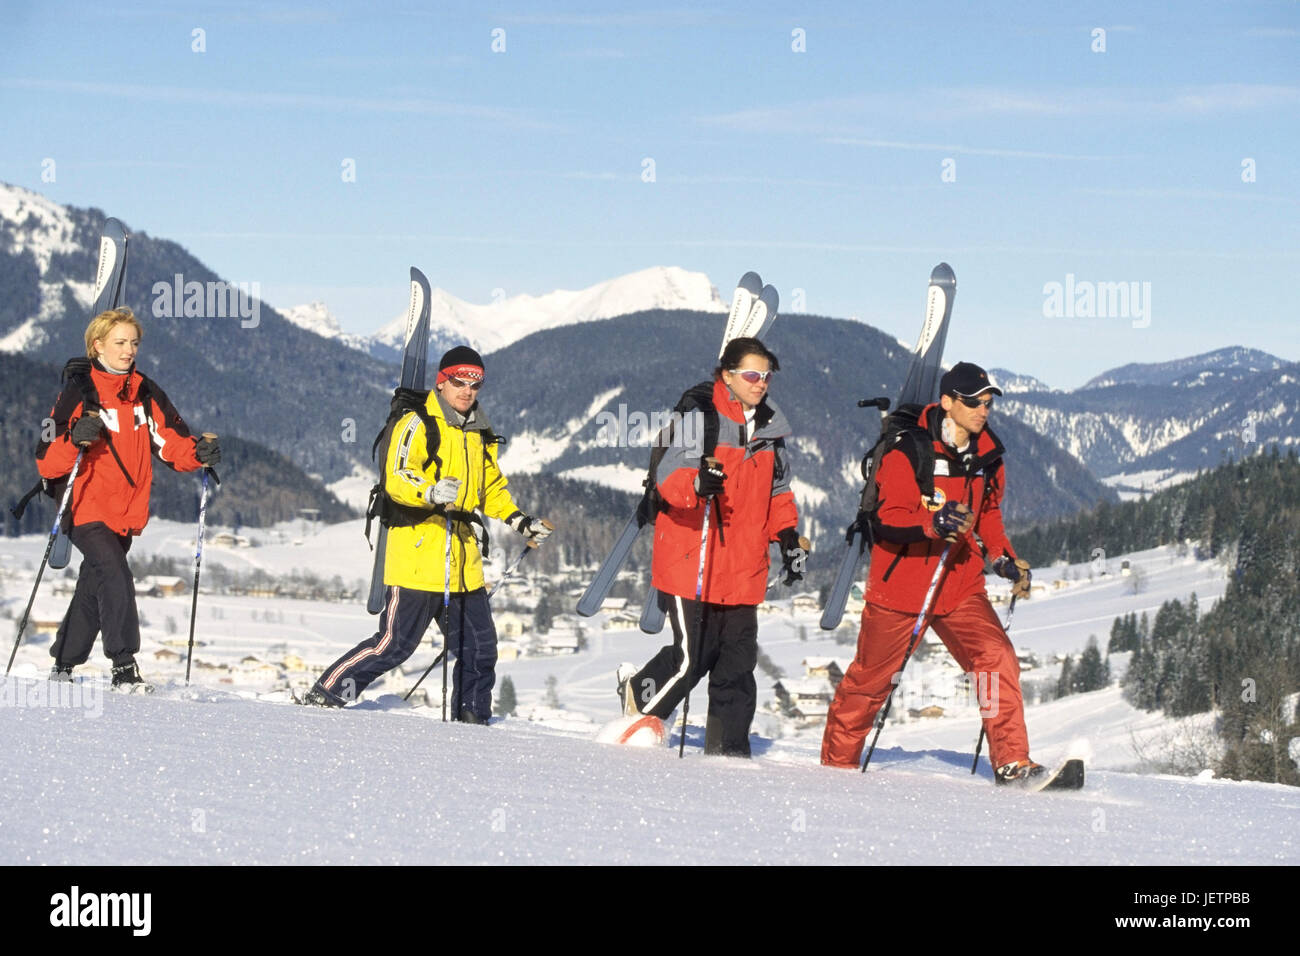 Le skieur loin du sommet, Skifahrer auf dem Weg zum Gipfel Banque D'Images